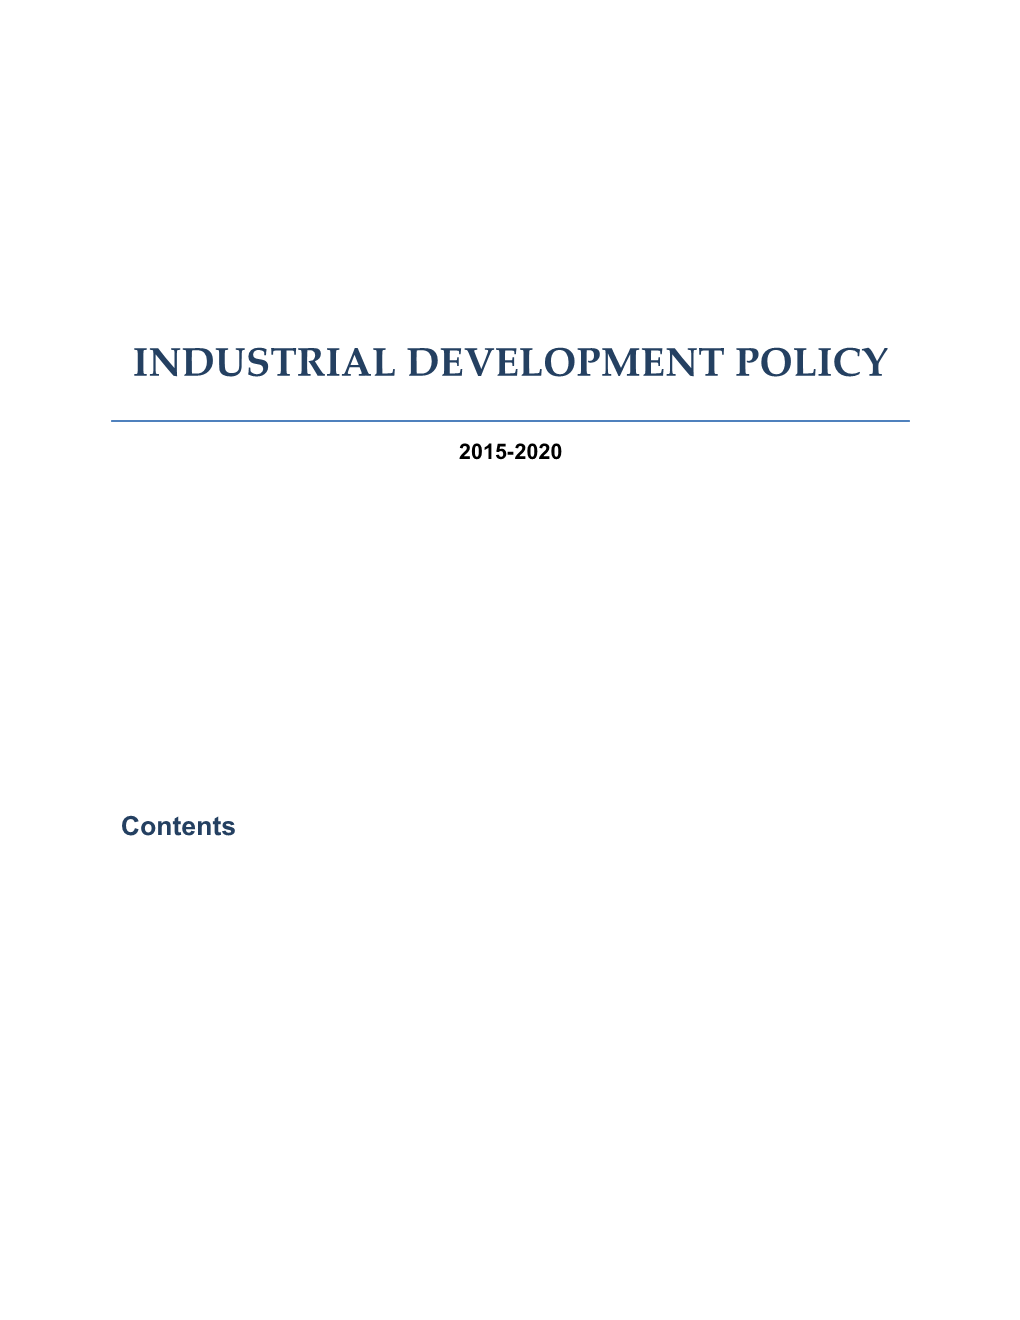 Industrial Development Policy